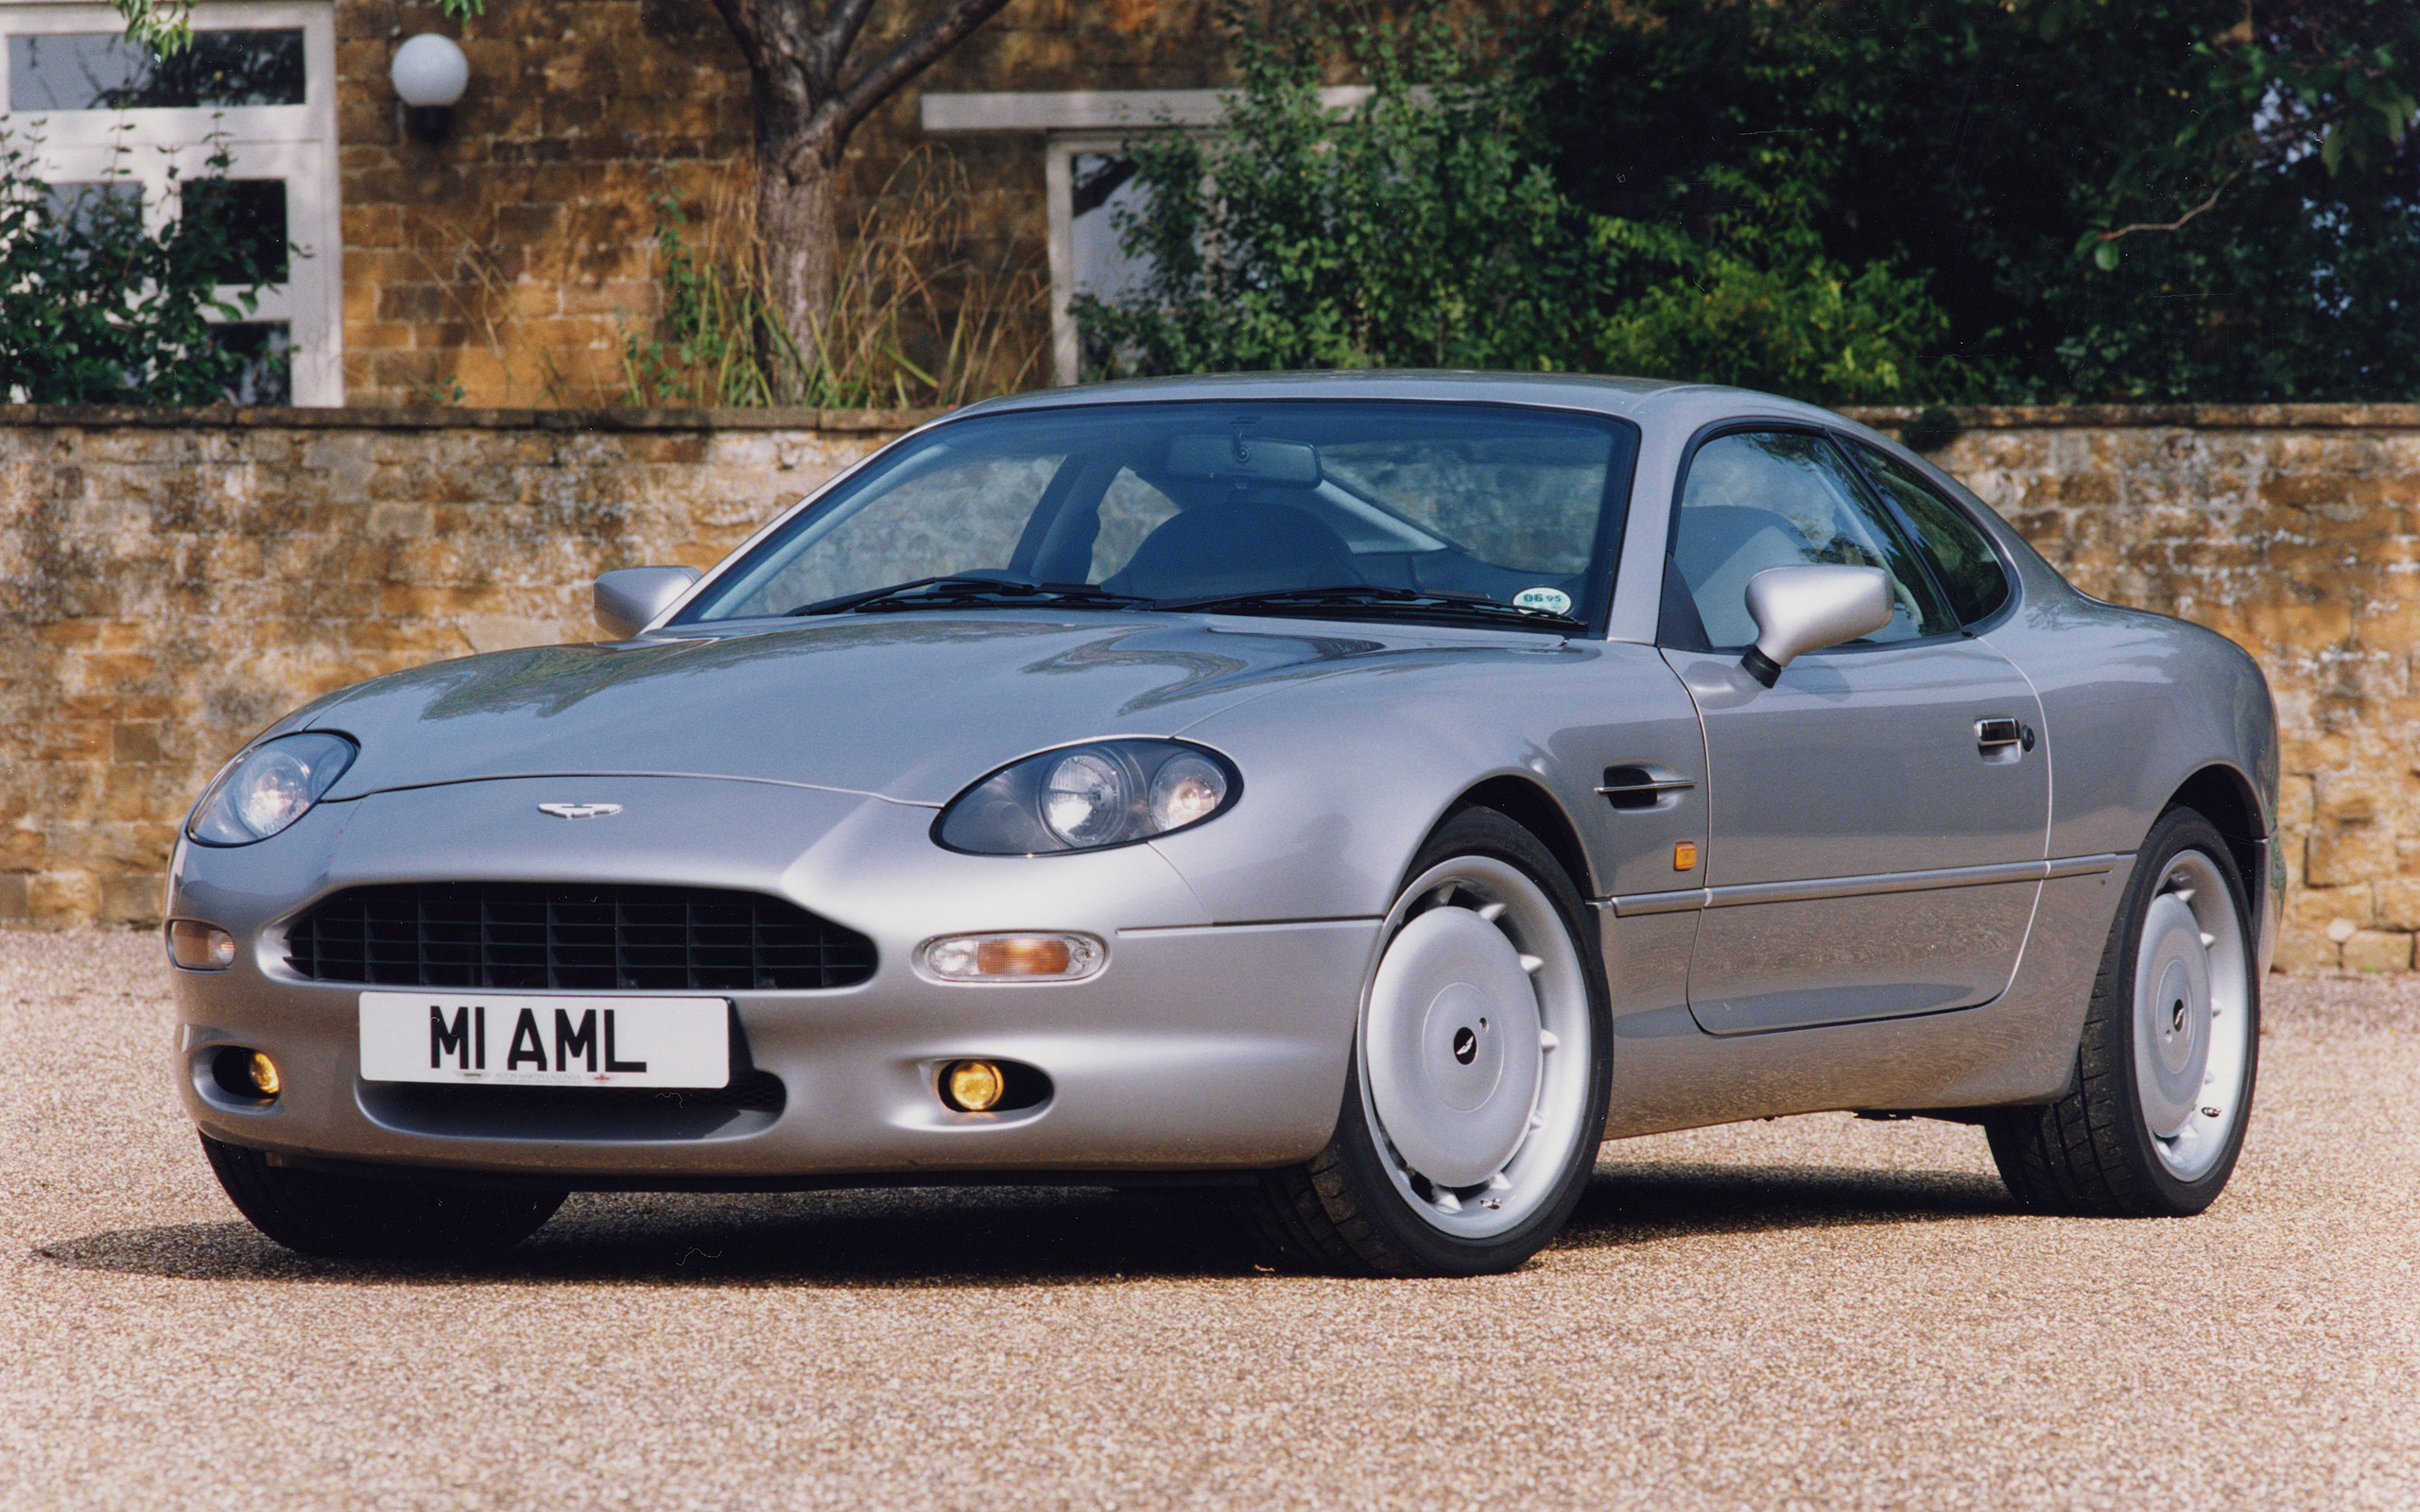  1994 Aston Martin DB7 Wallpaper.